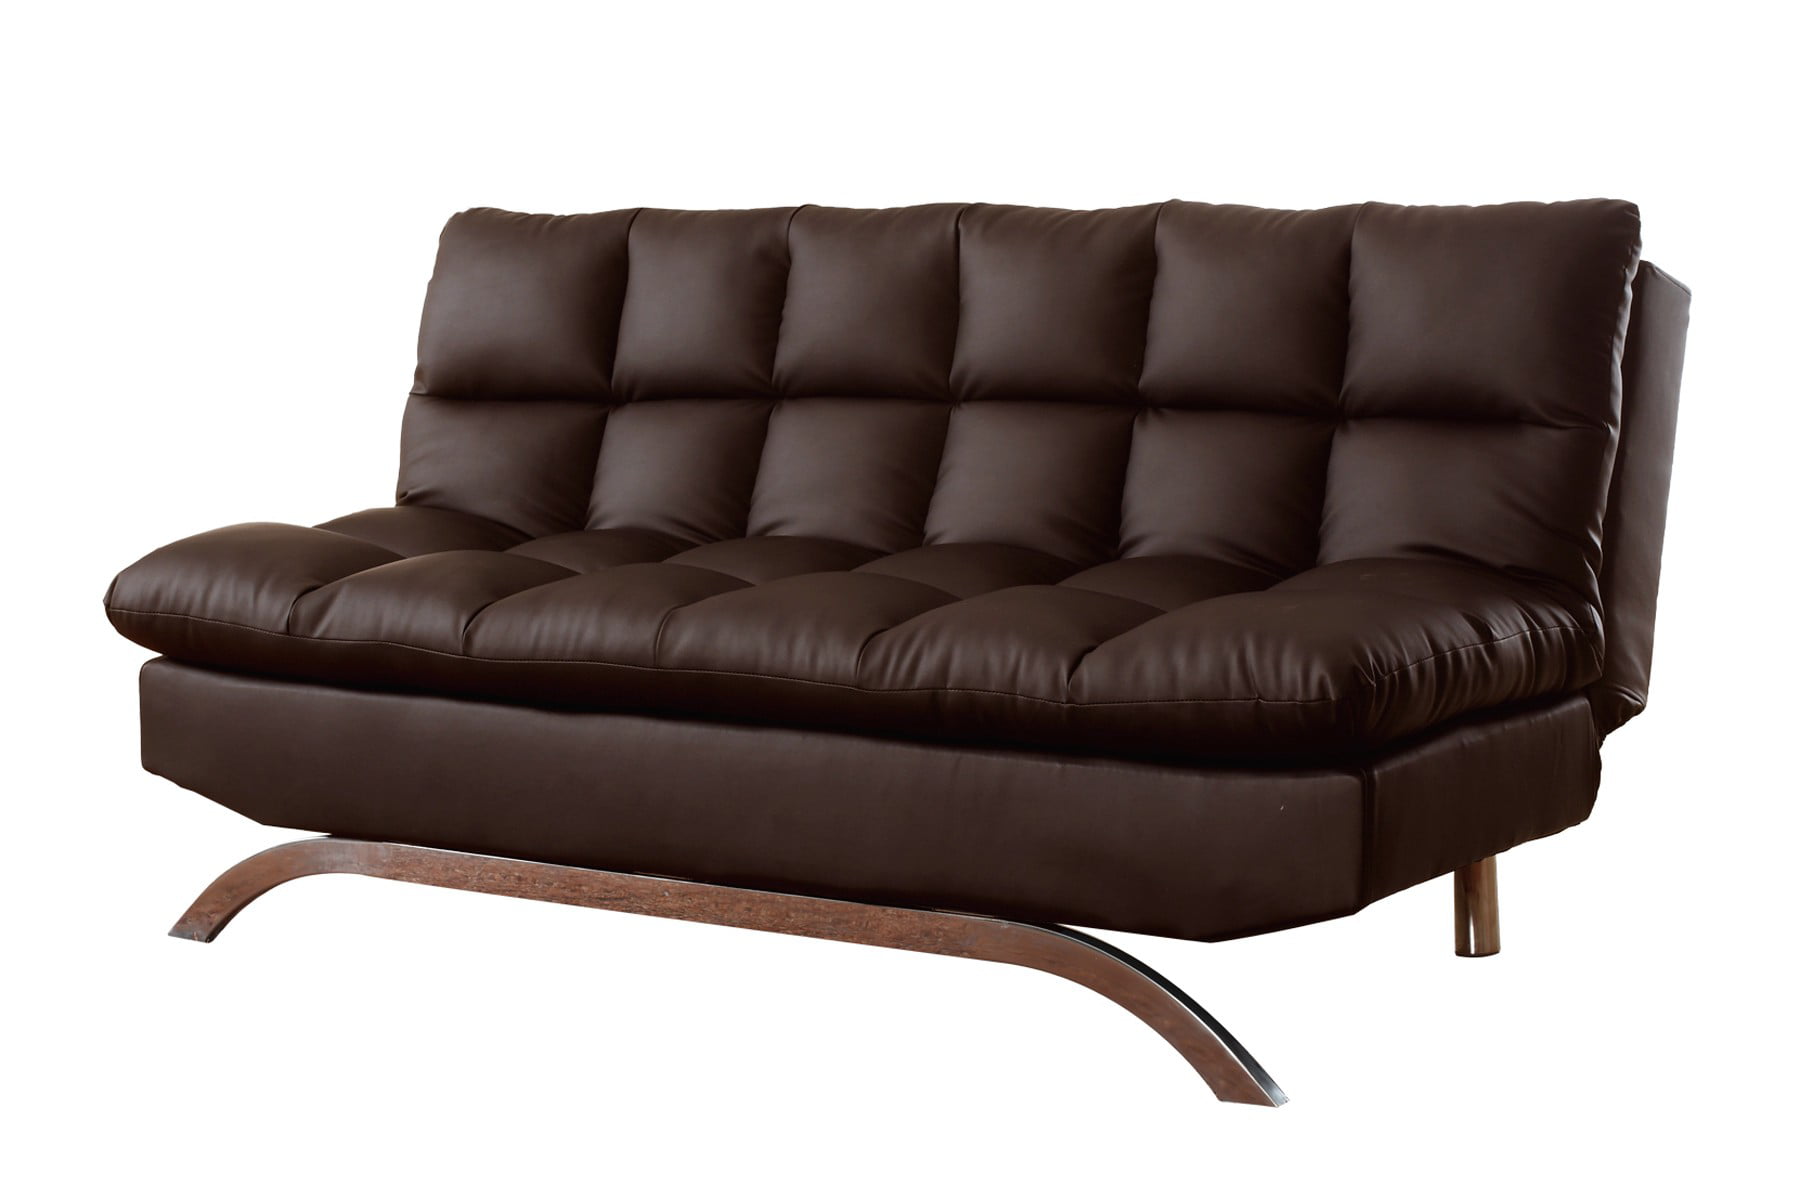 quality sofa futon double bed